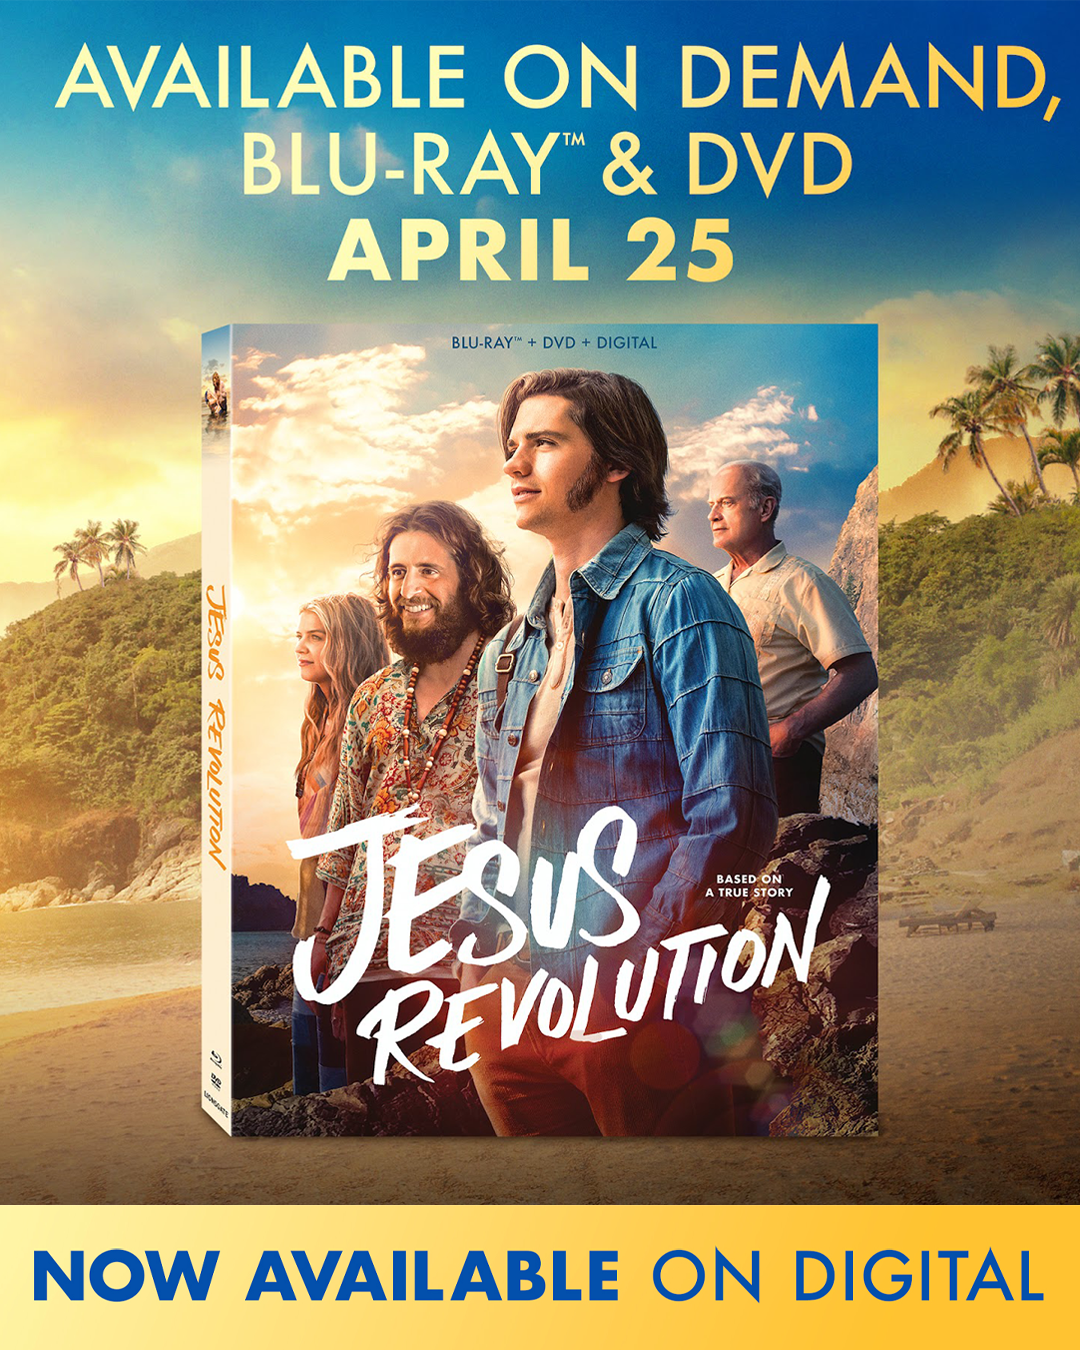 Jesus Revolution on digital now and on DVD April 25